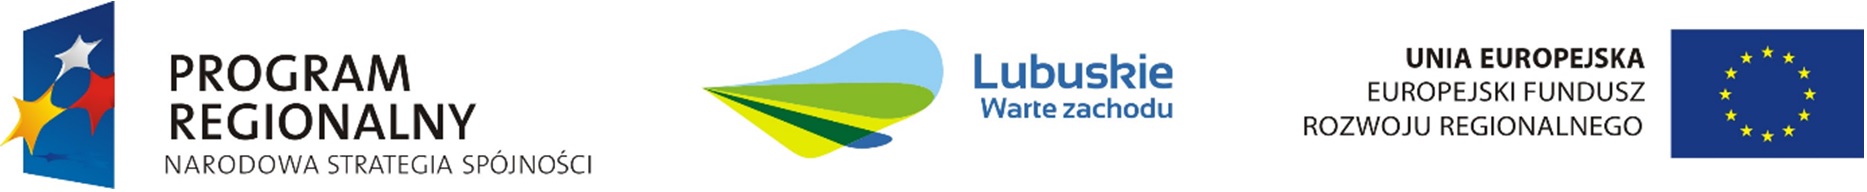 Logos-UE-LB